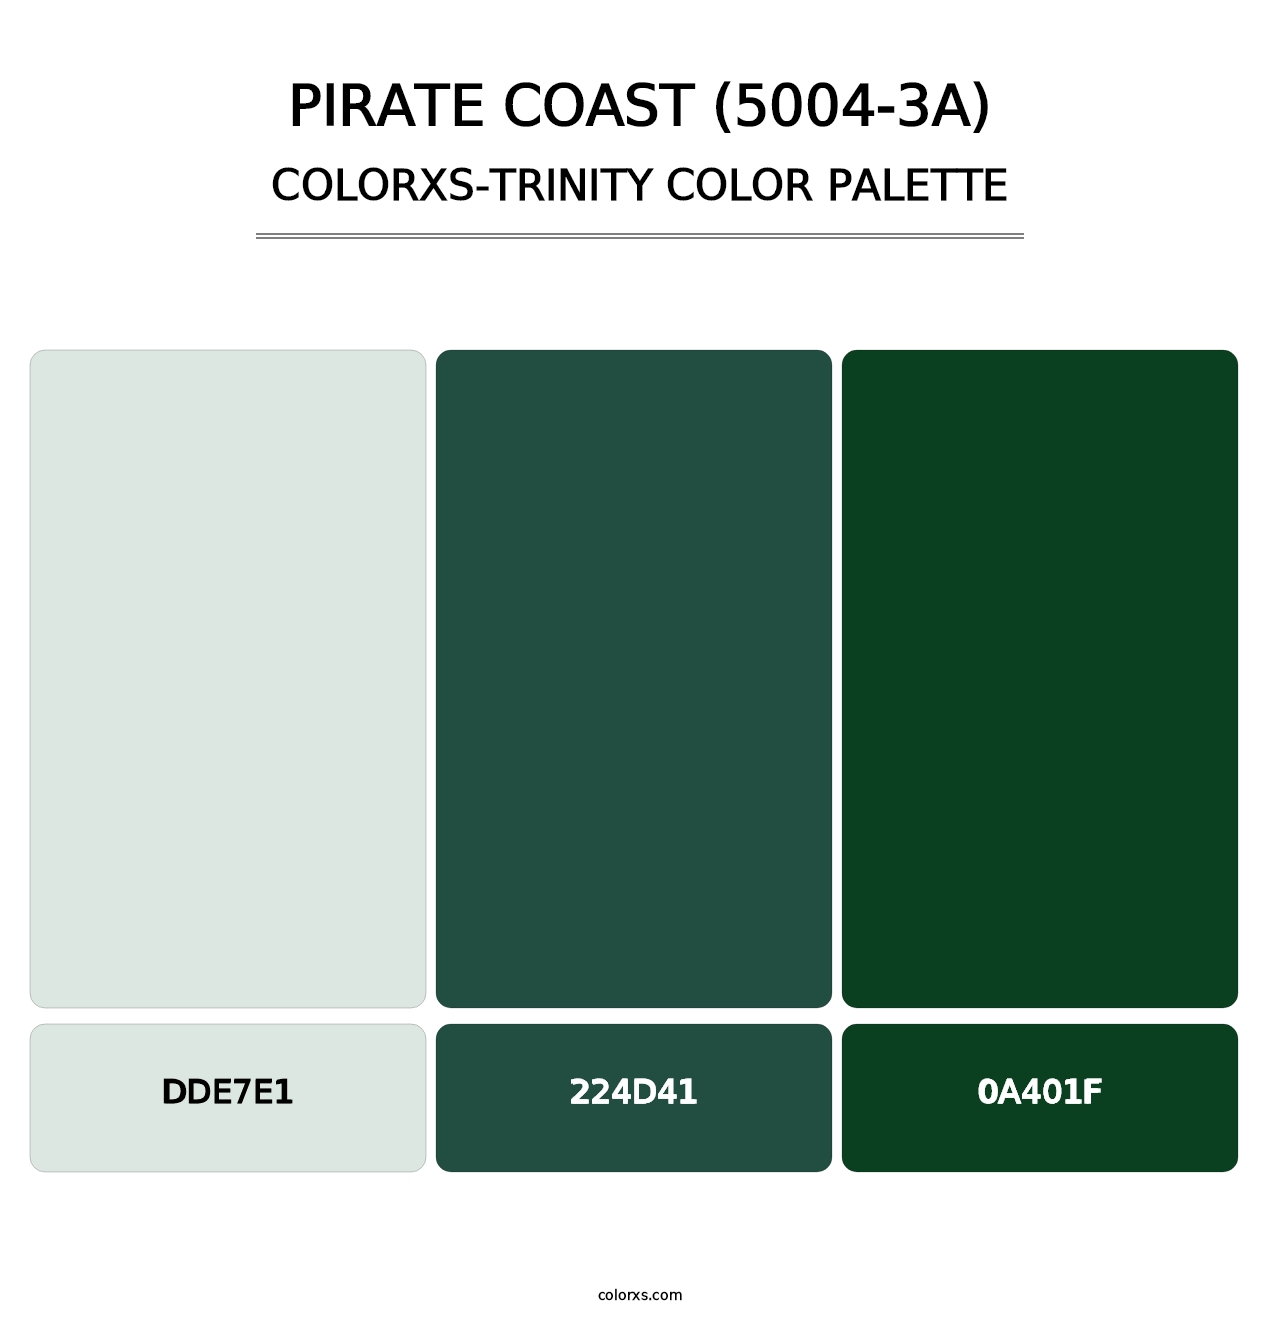 Pirate Coast (5004-3A) - Colorxs Trinity Palette